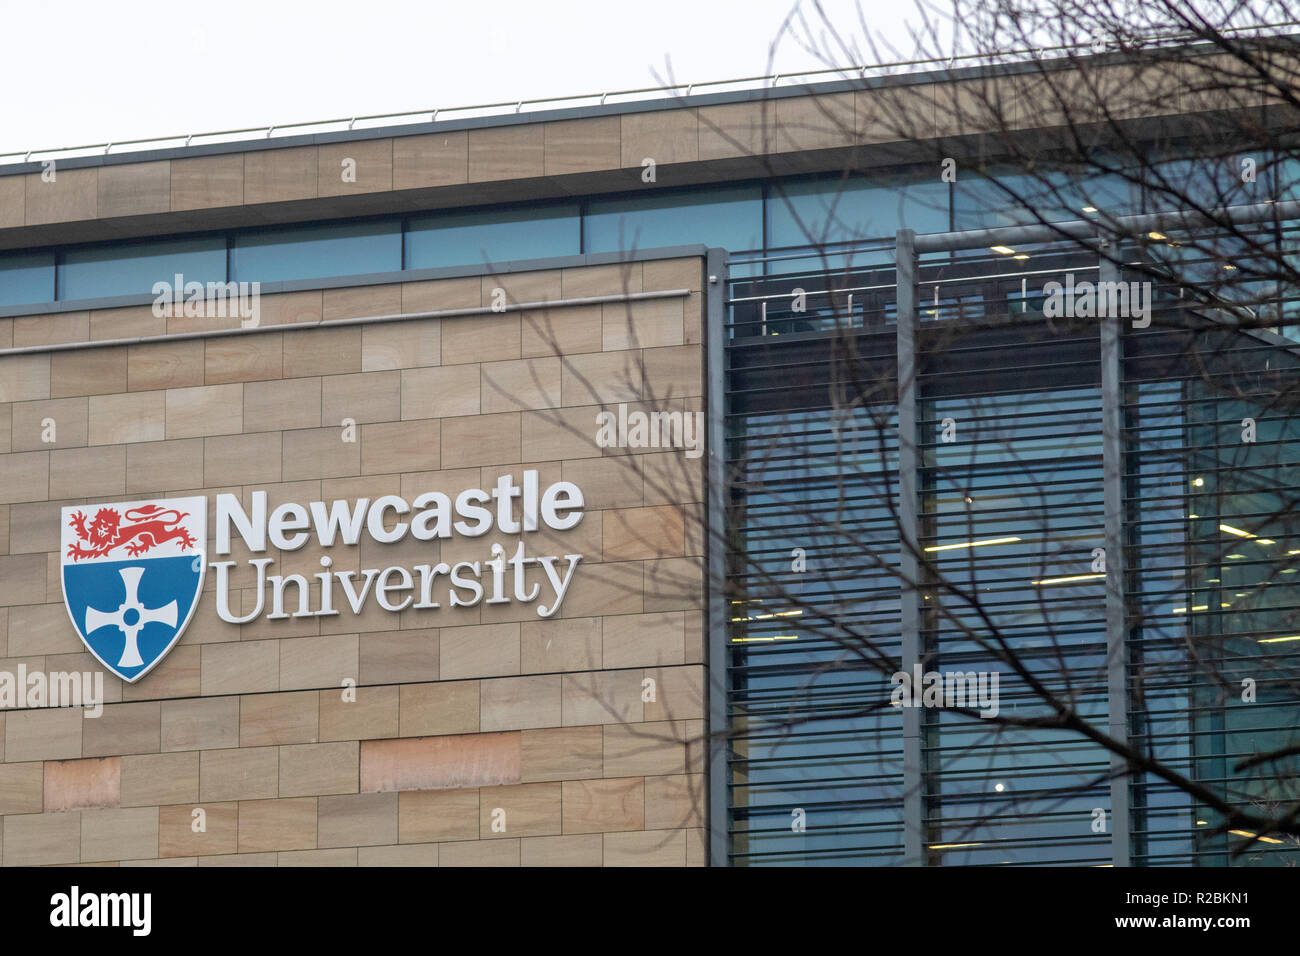 Newcastle upon Tyne/England - January 10th 2018: Newcastle University building sign Stock Photo